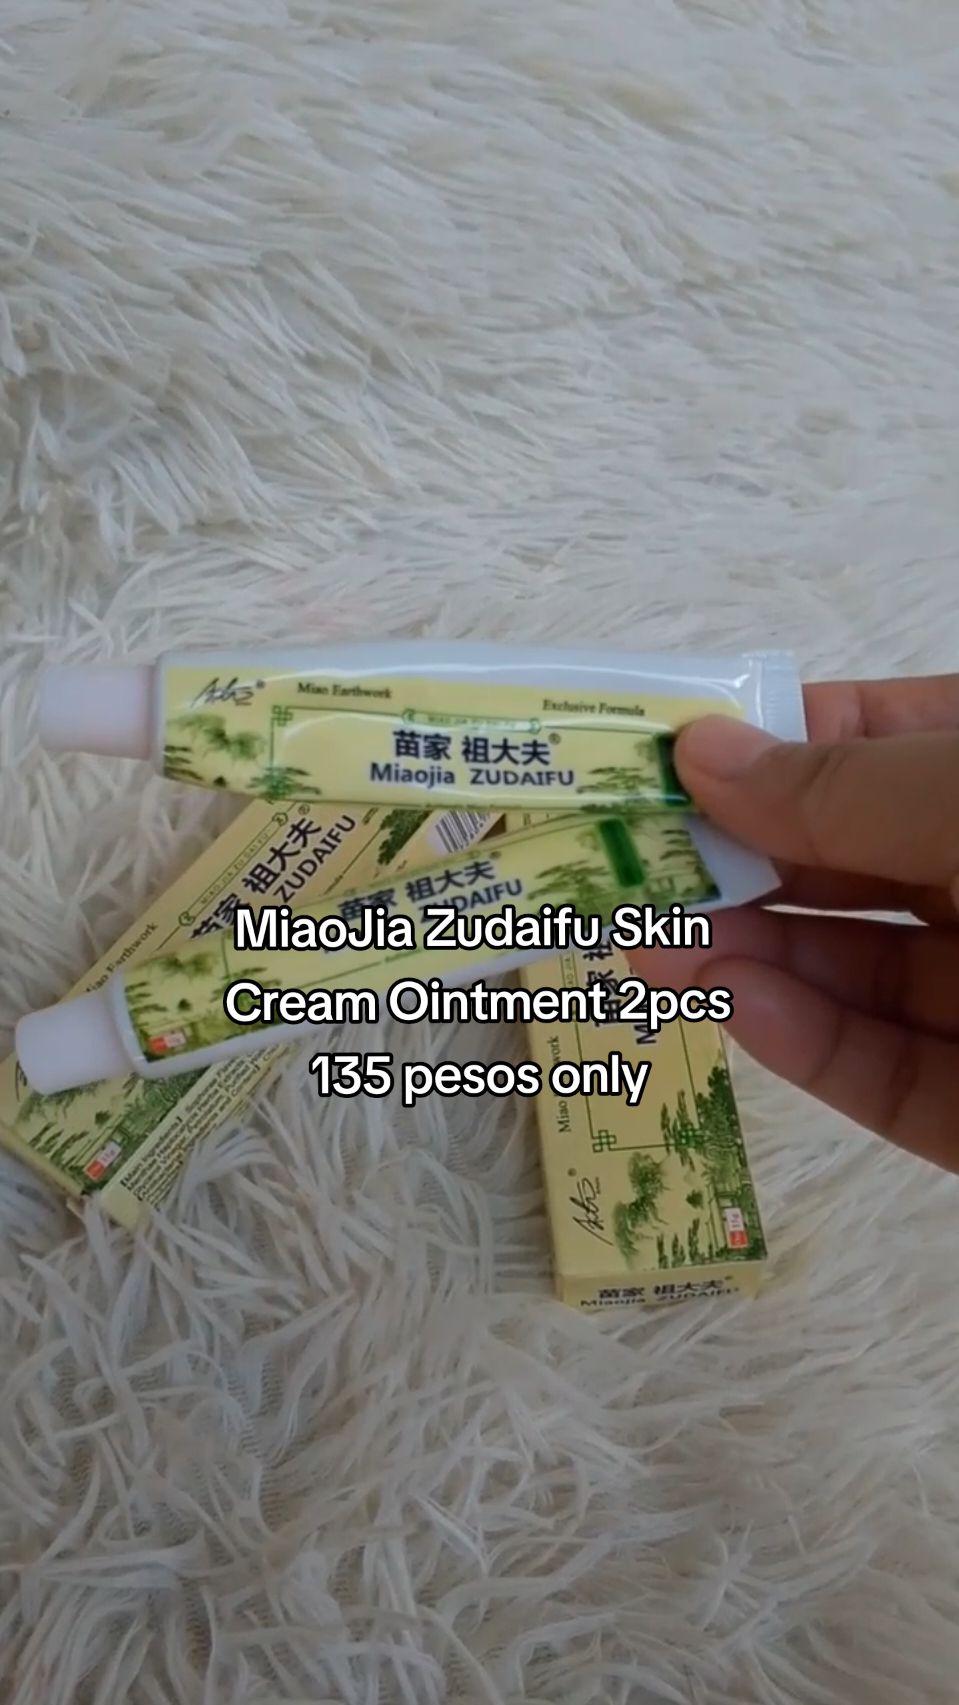 MiaoJia Zudaifu Skin Cream Ointment 2pcs P135 pesos only!! ang ganda nito, effective and affordable pa. 💯 #ointment #effective #zudaifu #zudaifuoriginal #skintreatment 